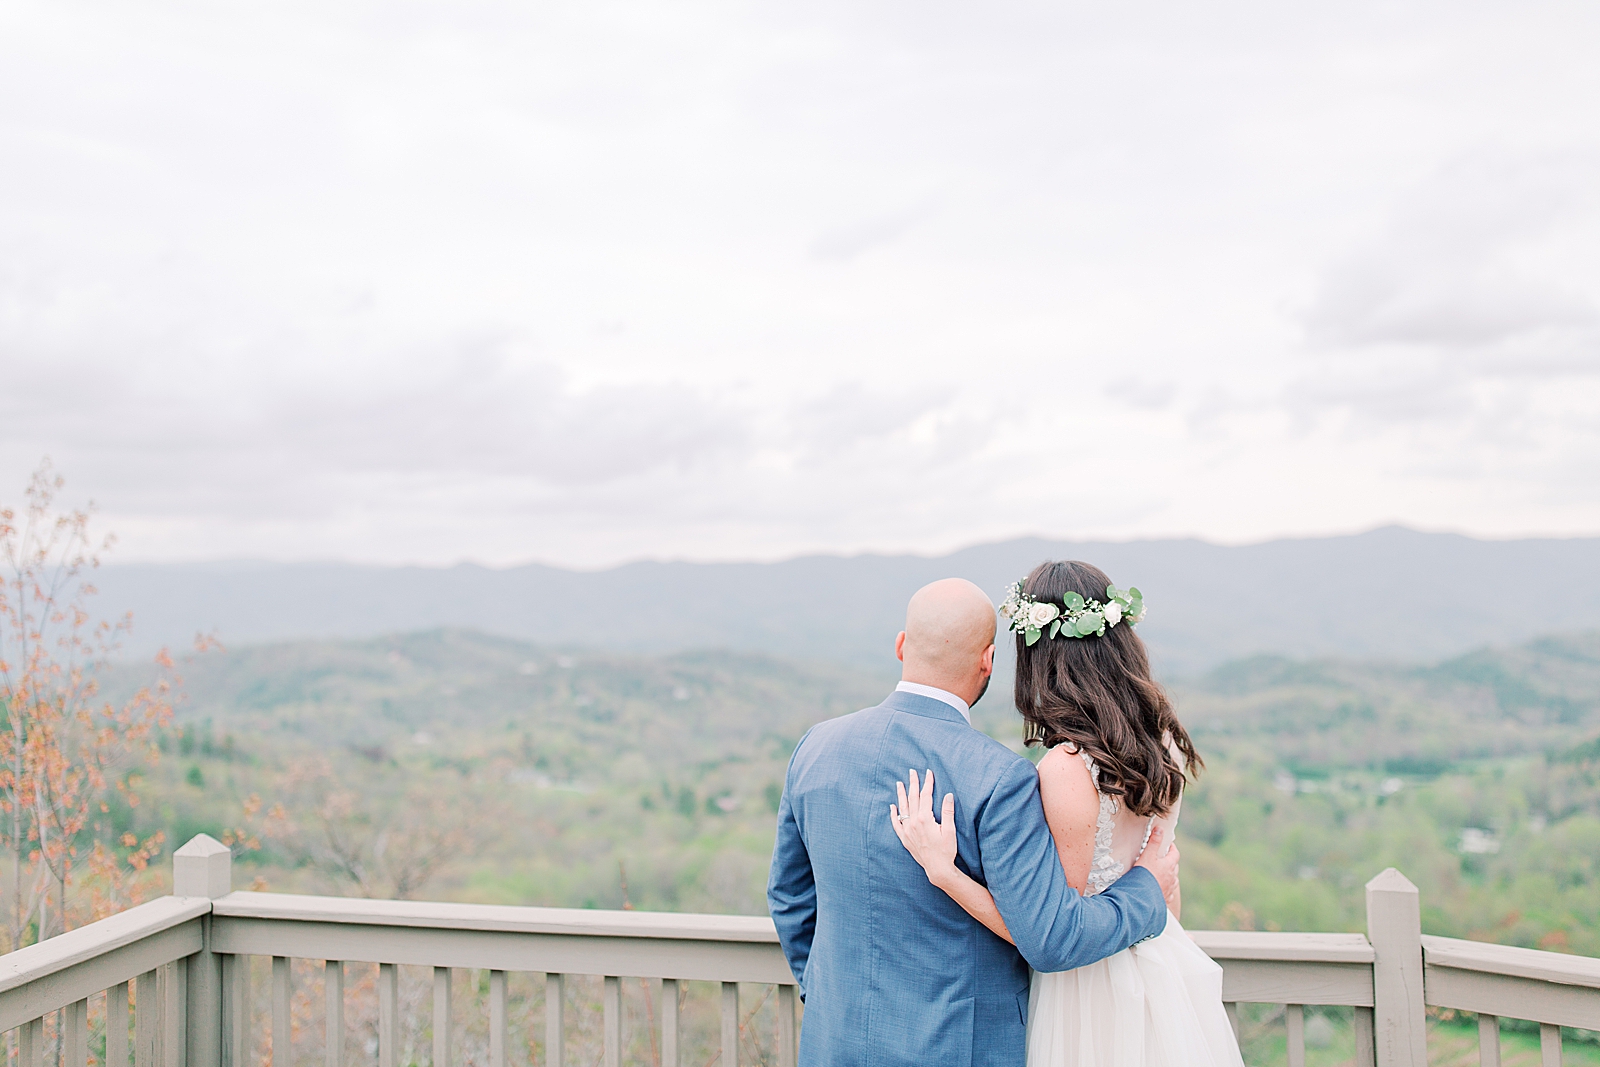 Spring Hawkesdene Wedding Bride and Groom overlooking mountain view Photo